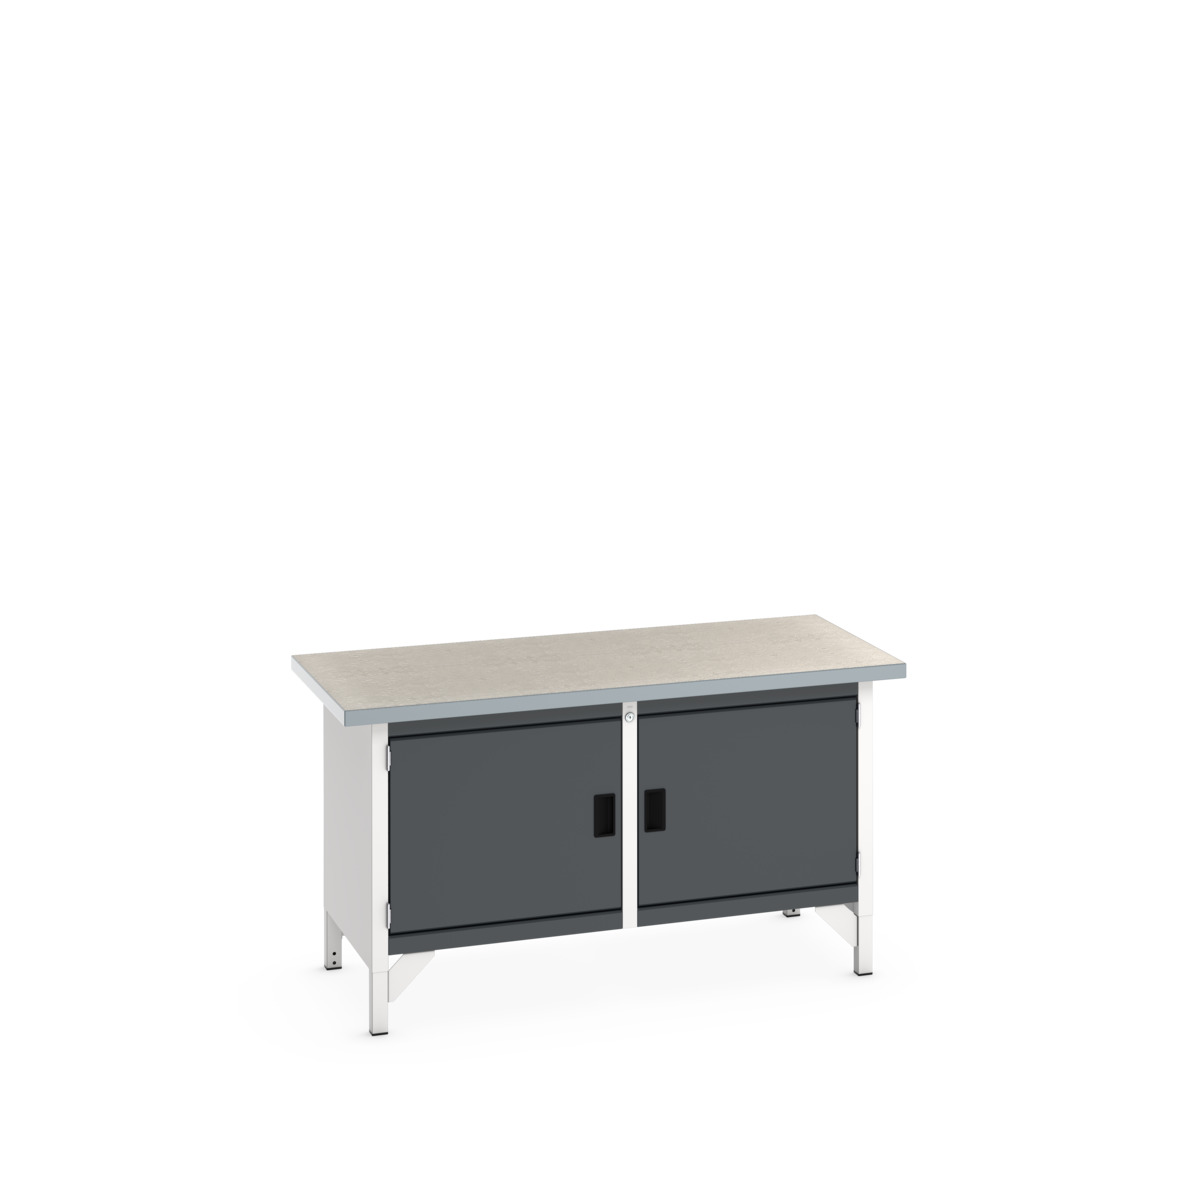 41002024. - cubio storage bench (lino)